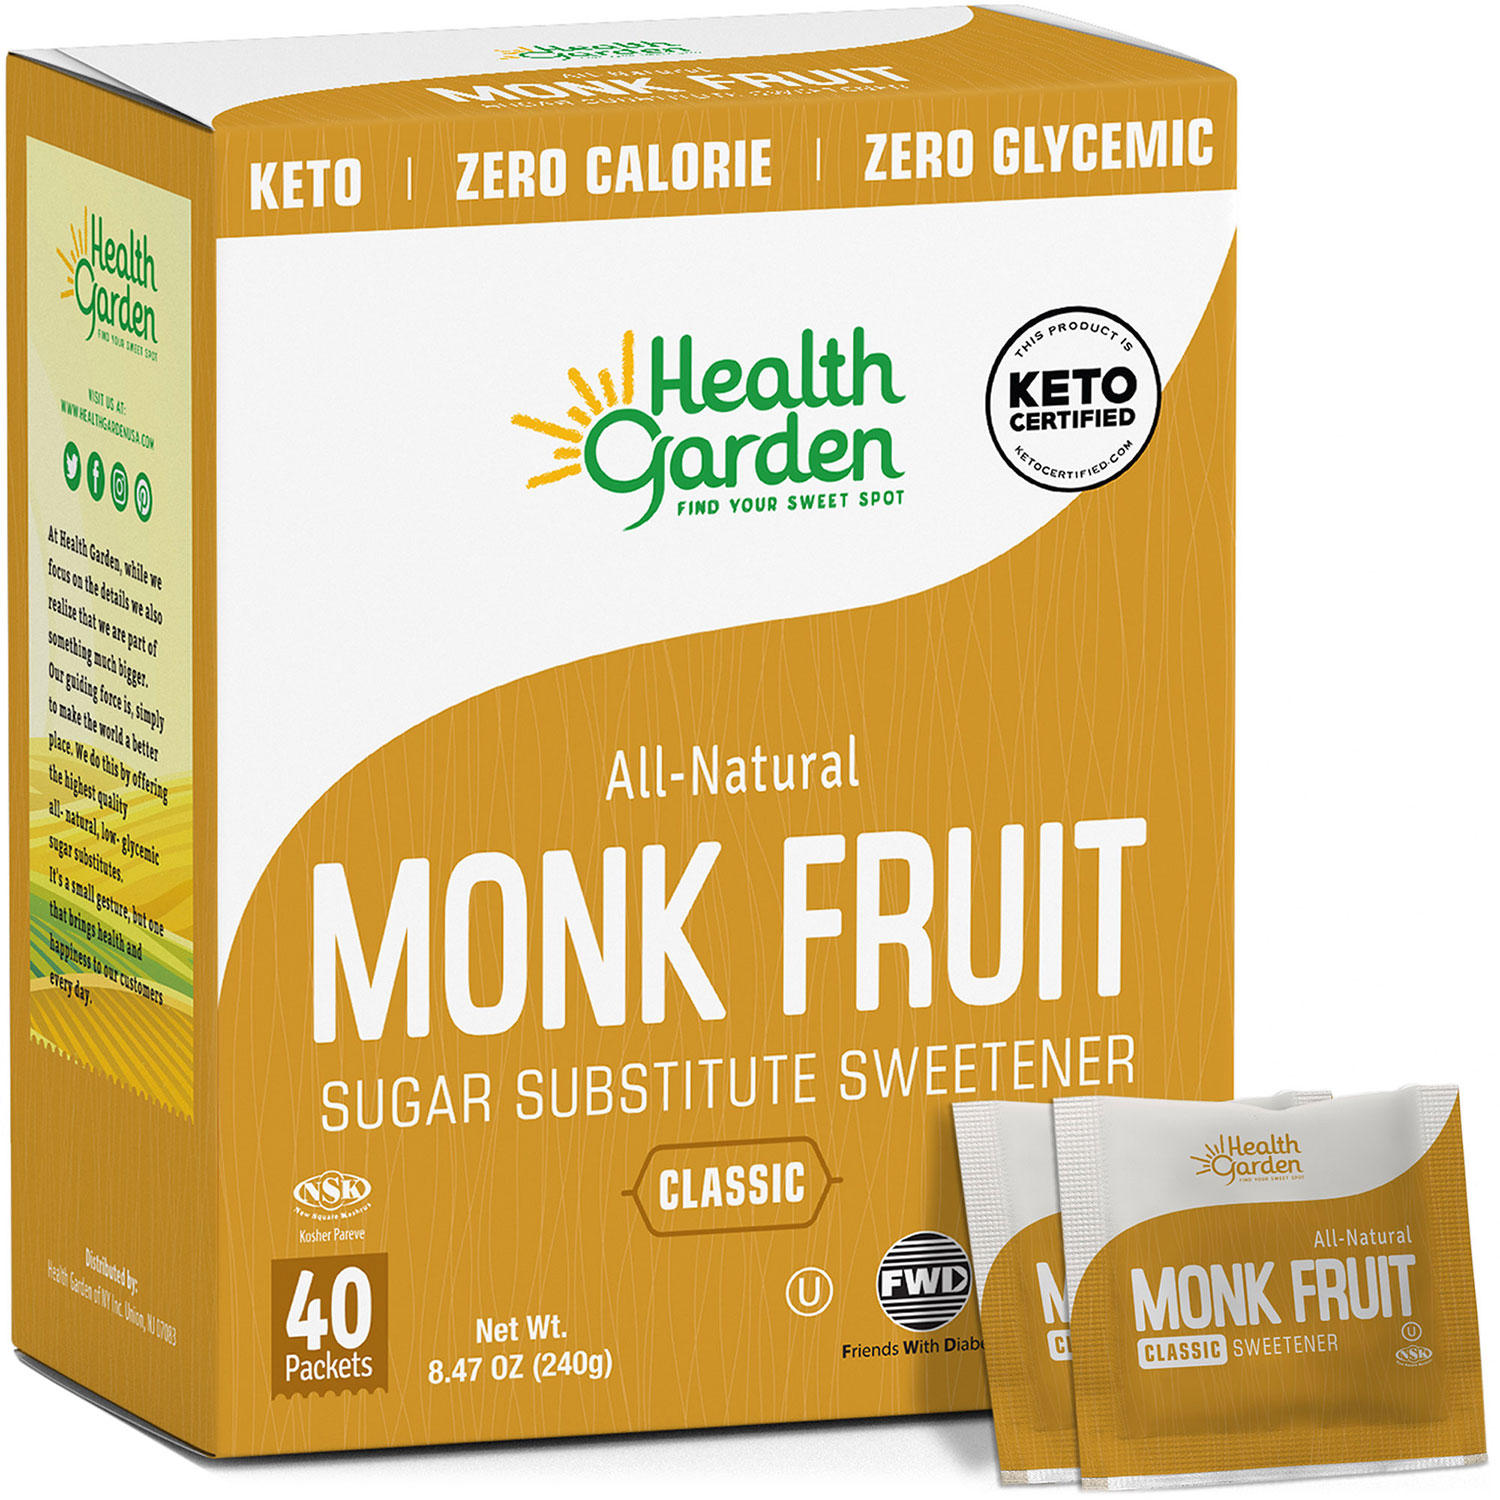 Health Garden Classic All-Natural Monk Fruit Sweetener, 40 pack, 8.47 Oz